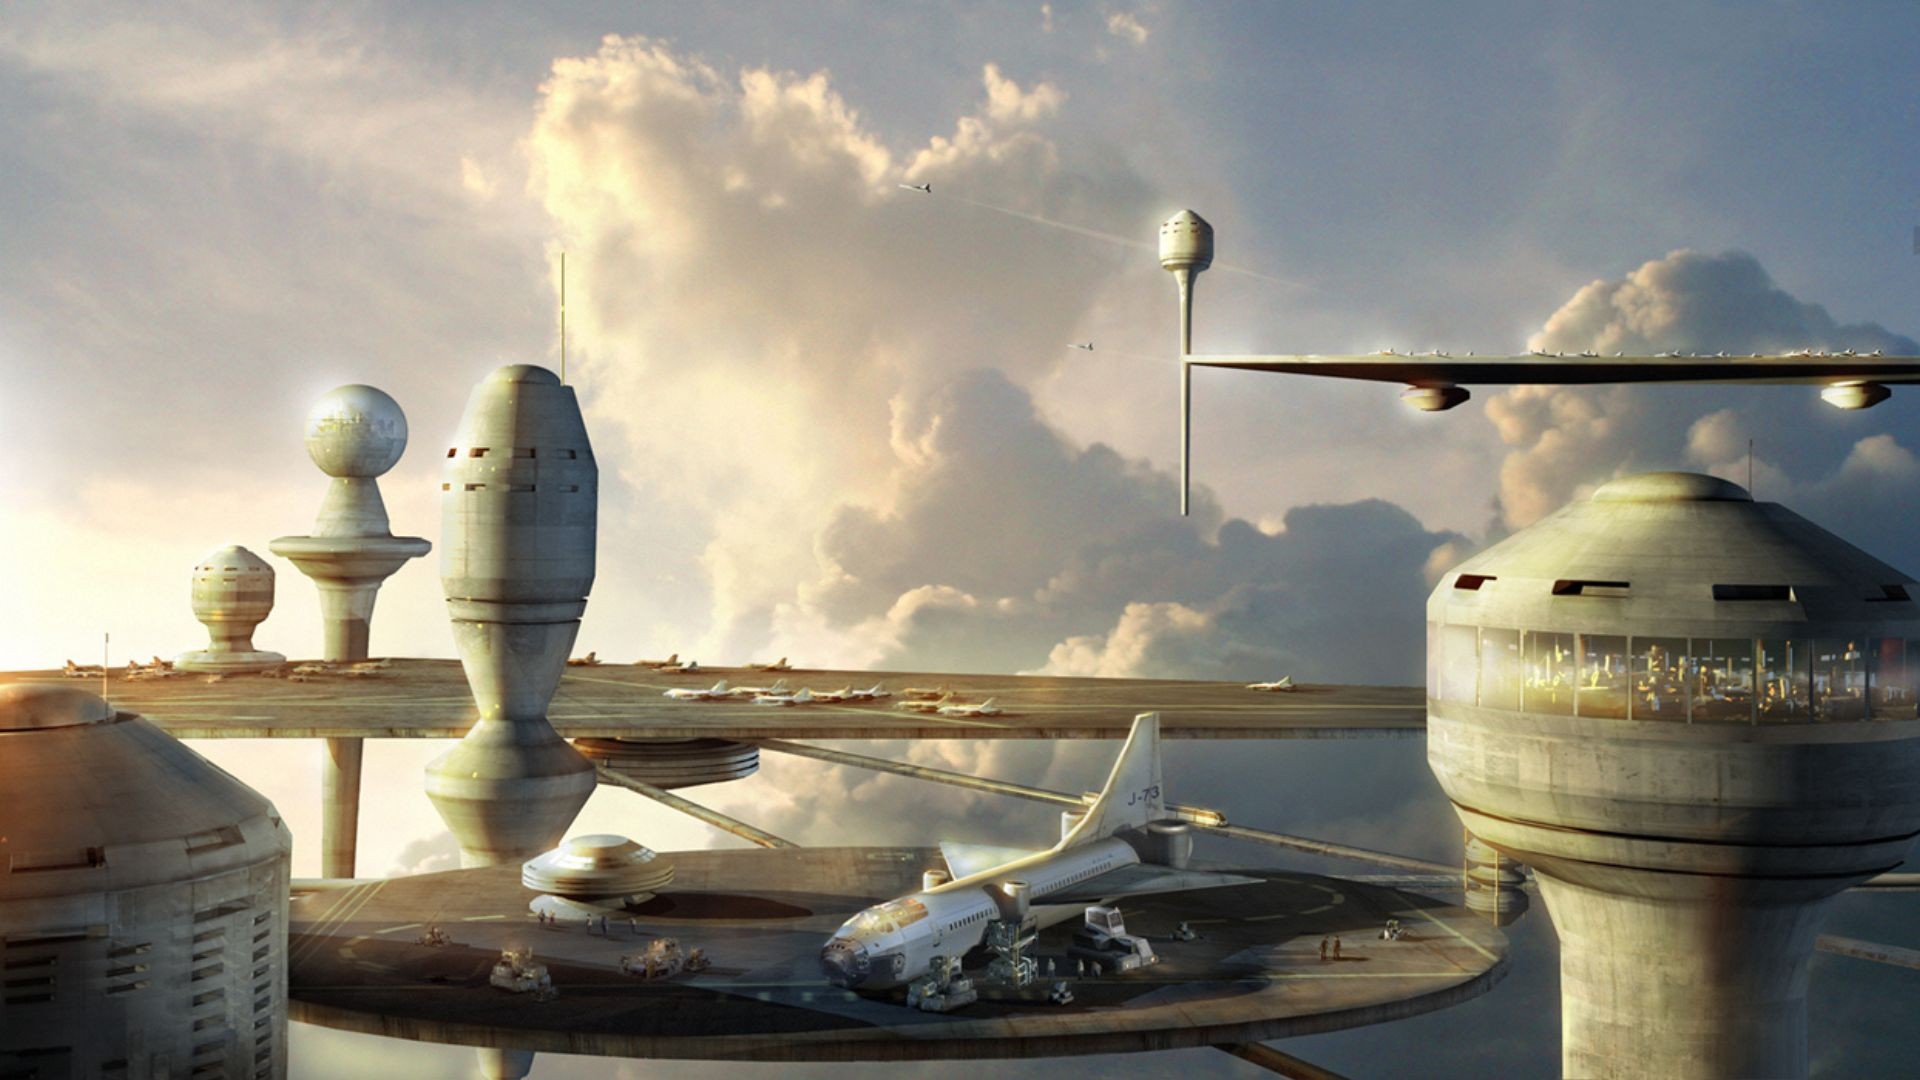 General 1920x1080 science fiction sky digital art vehicle clouds futuristic